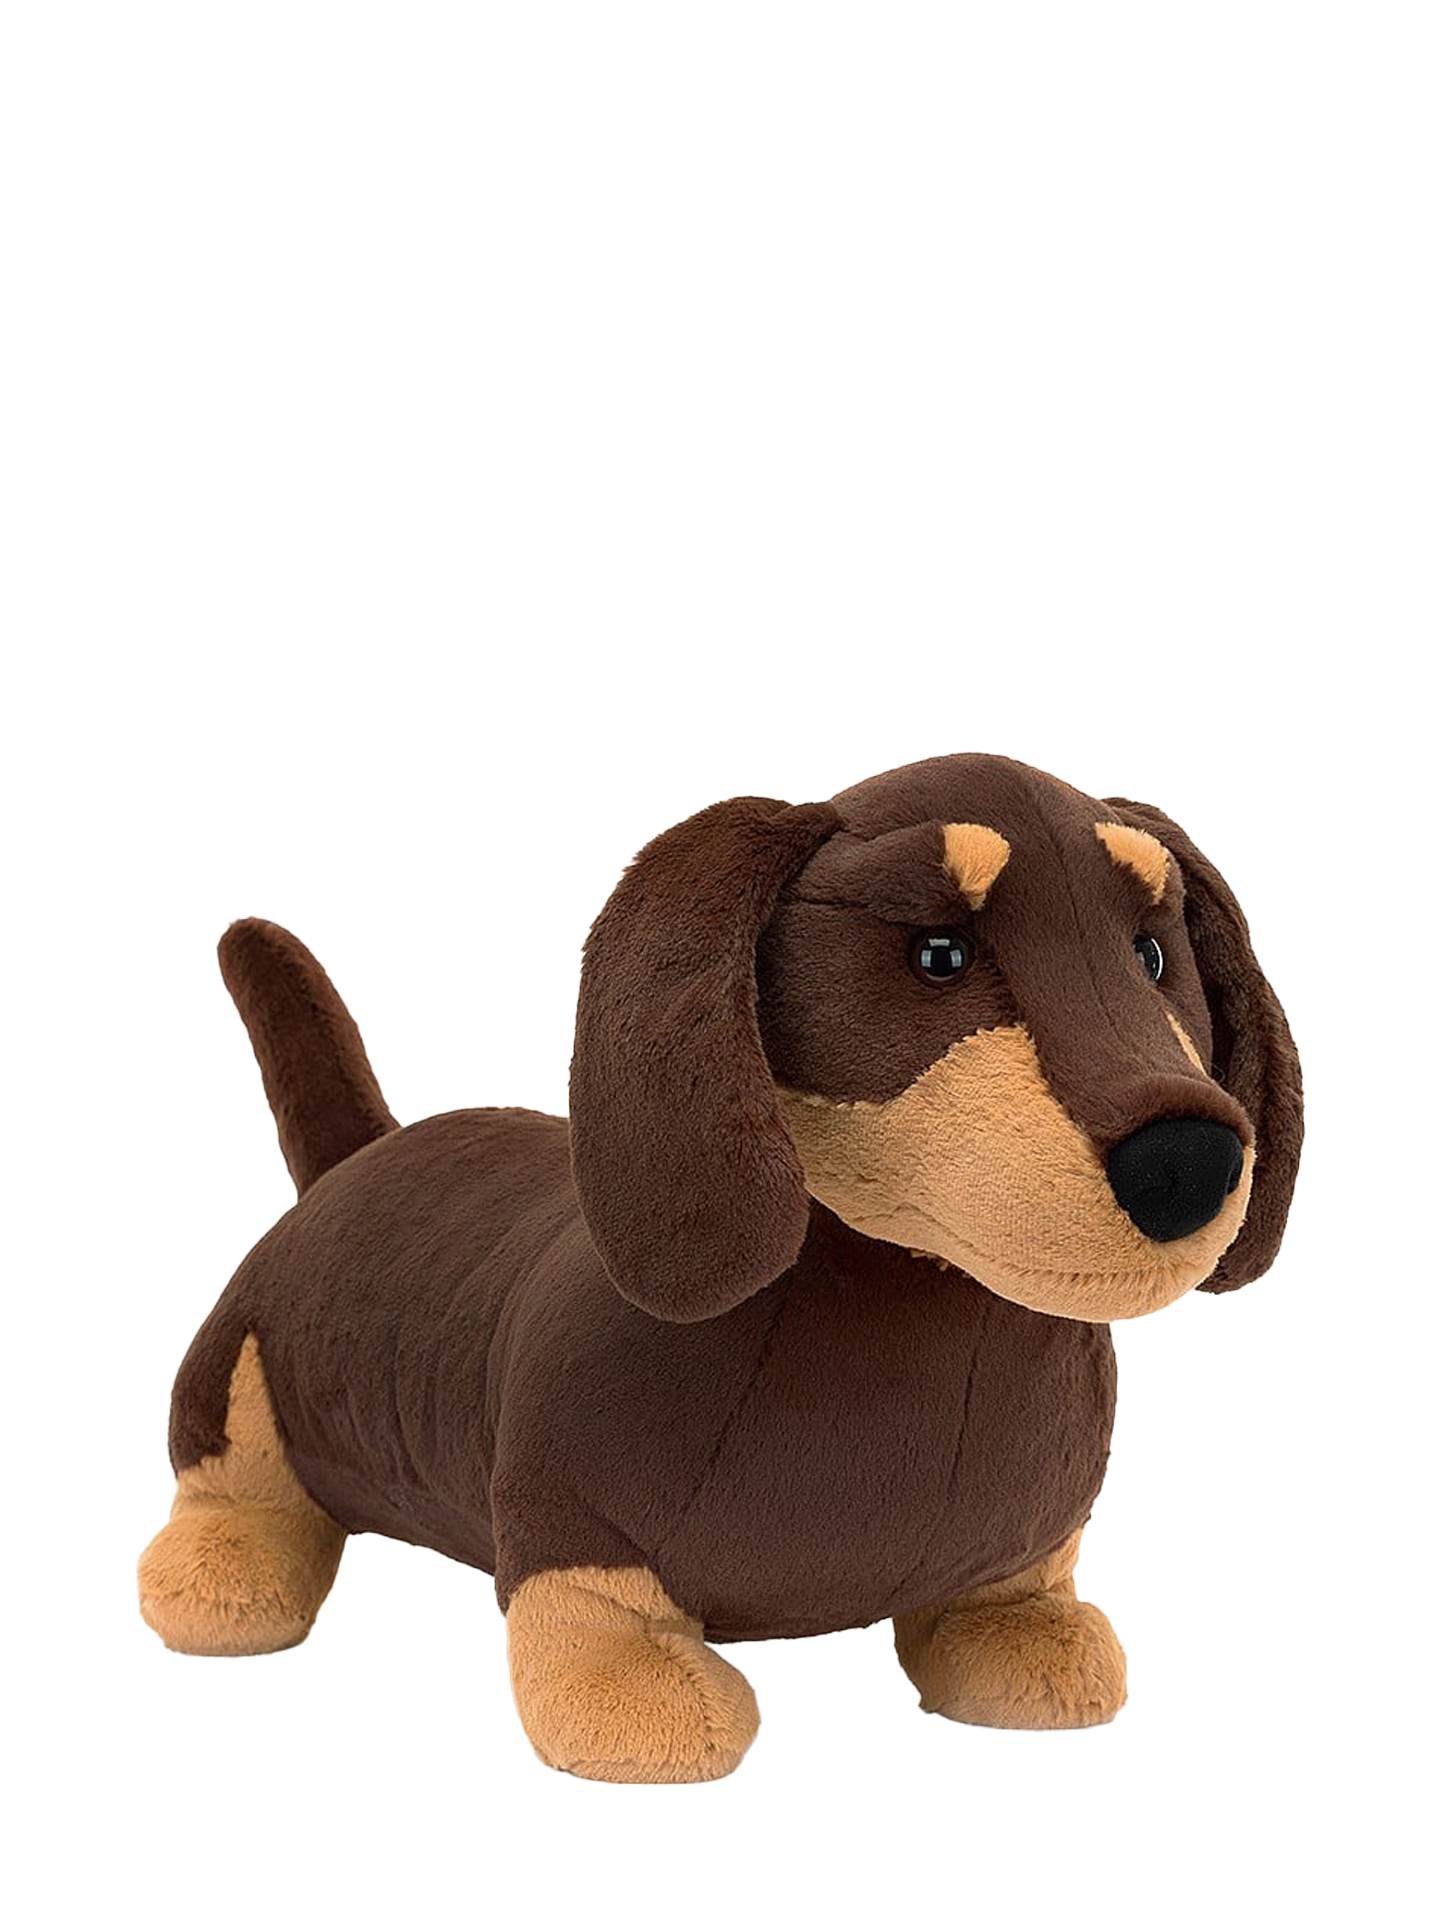 Huge Otto Sausage dog (dachshund), soft toy